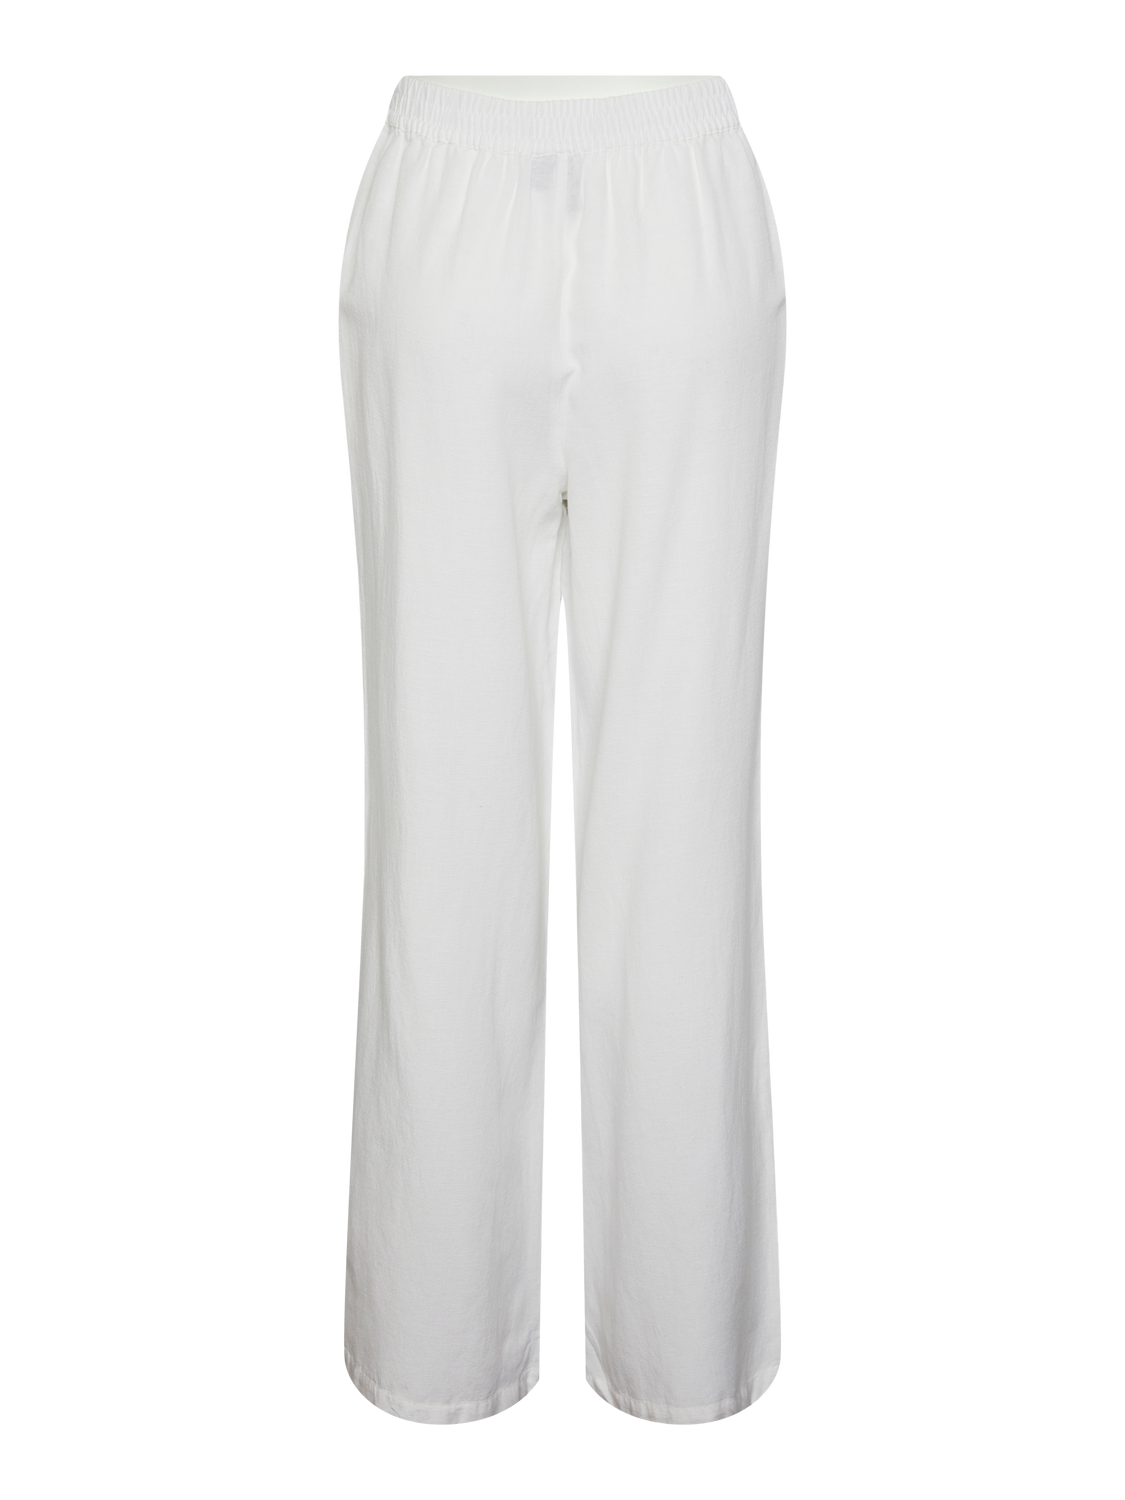 PCMILANO Pants - Bright White